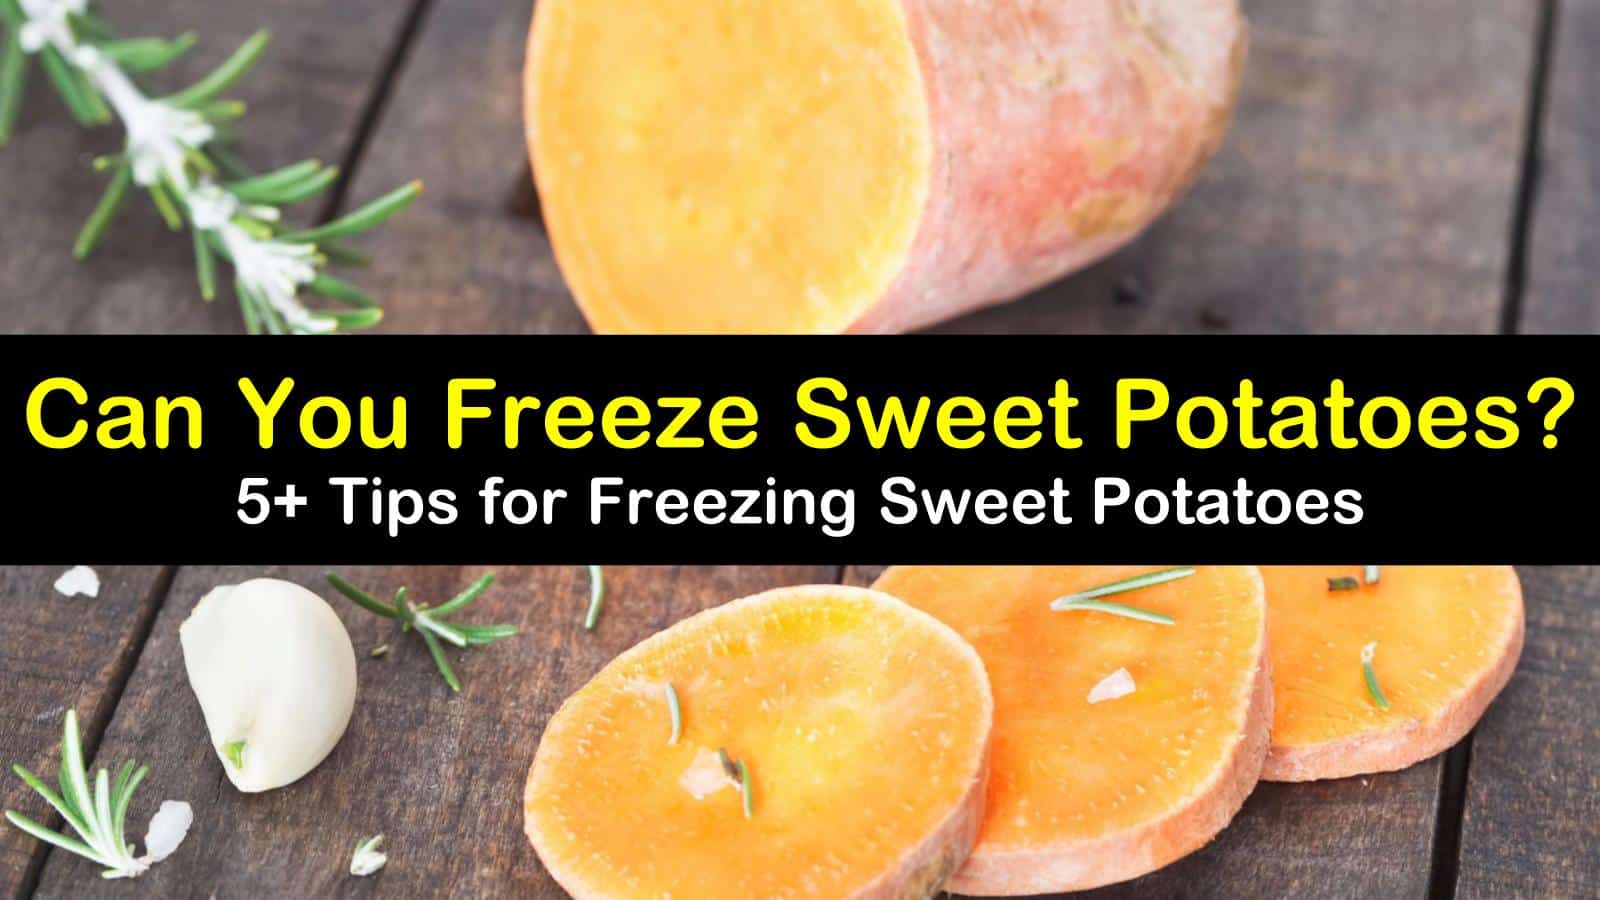 5+ Tips for Freezing Sweet Potatoes